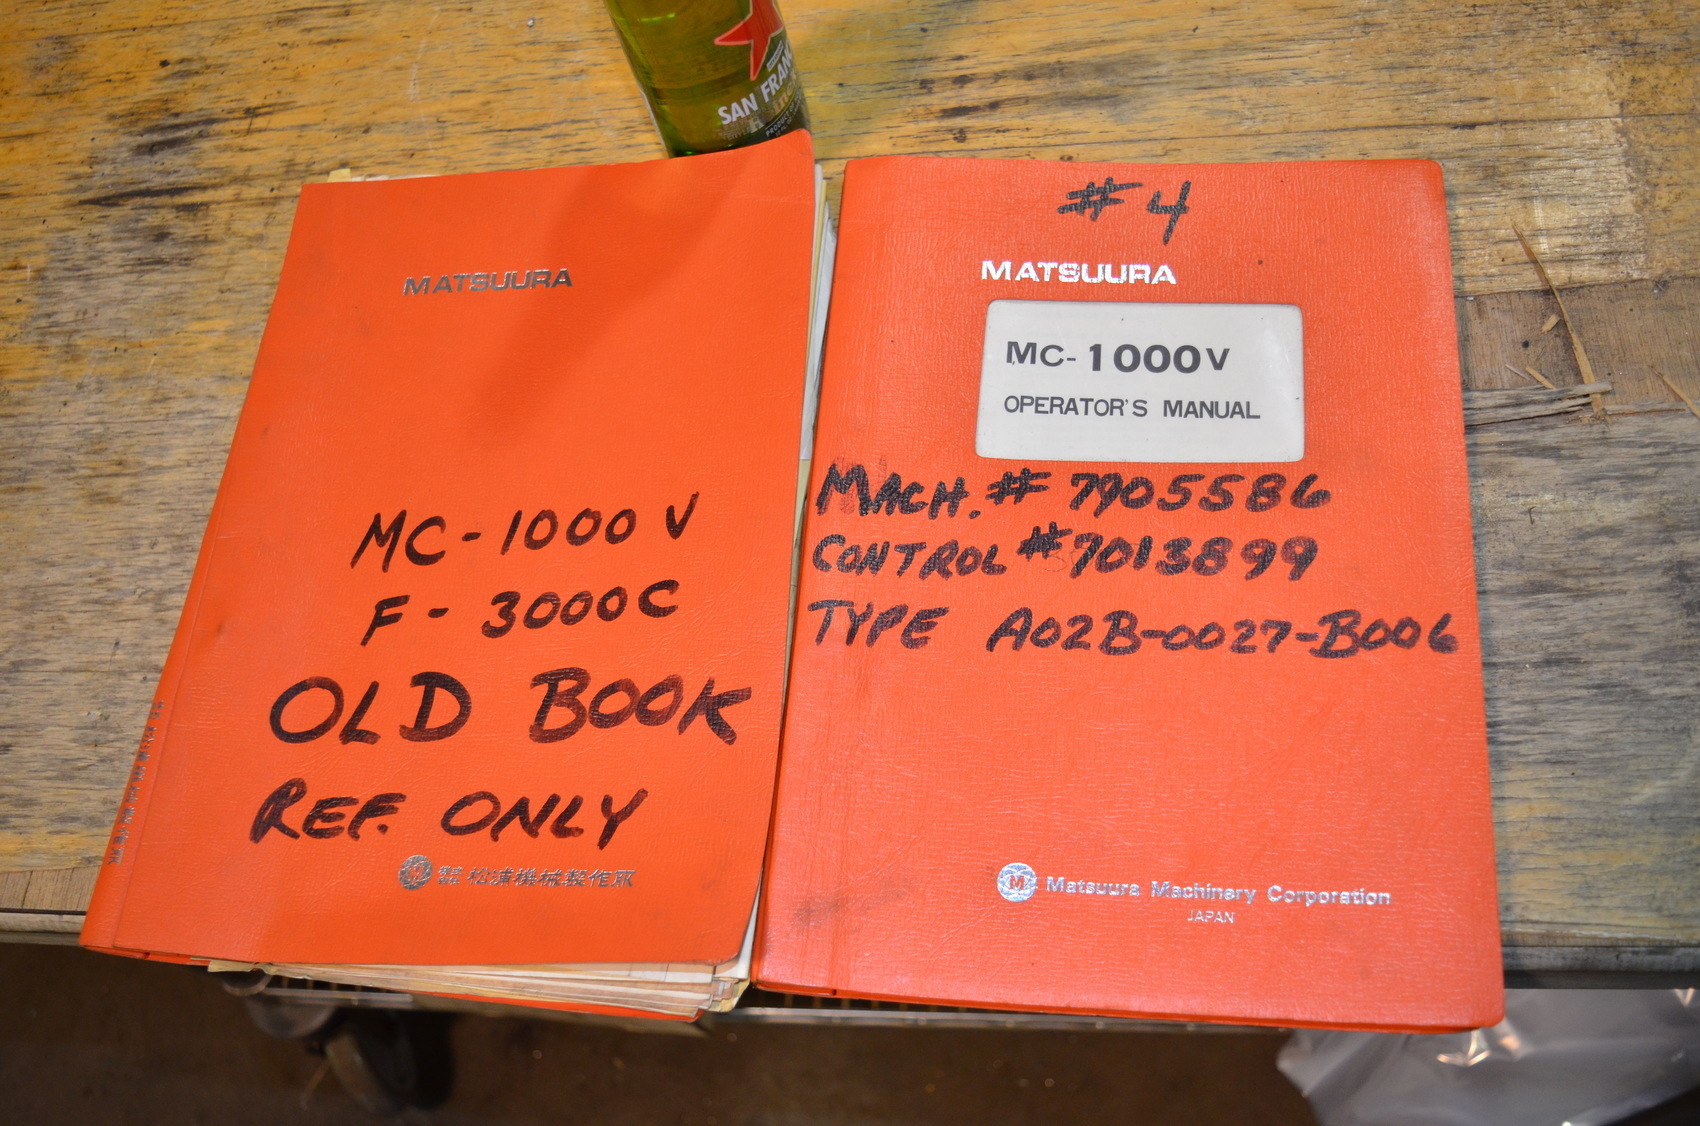 Lot of 2 manuals for Matsuura MC-1000V w/electric schematic